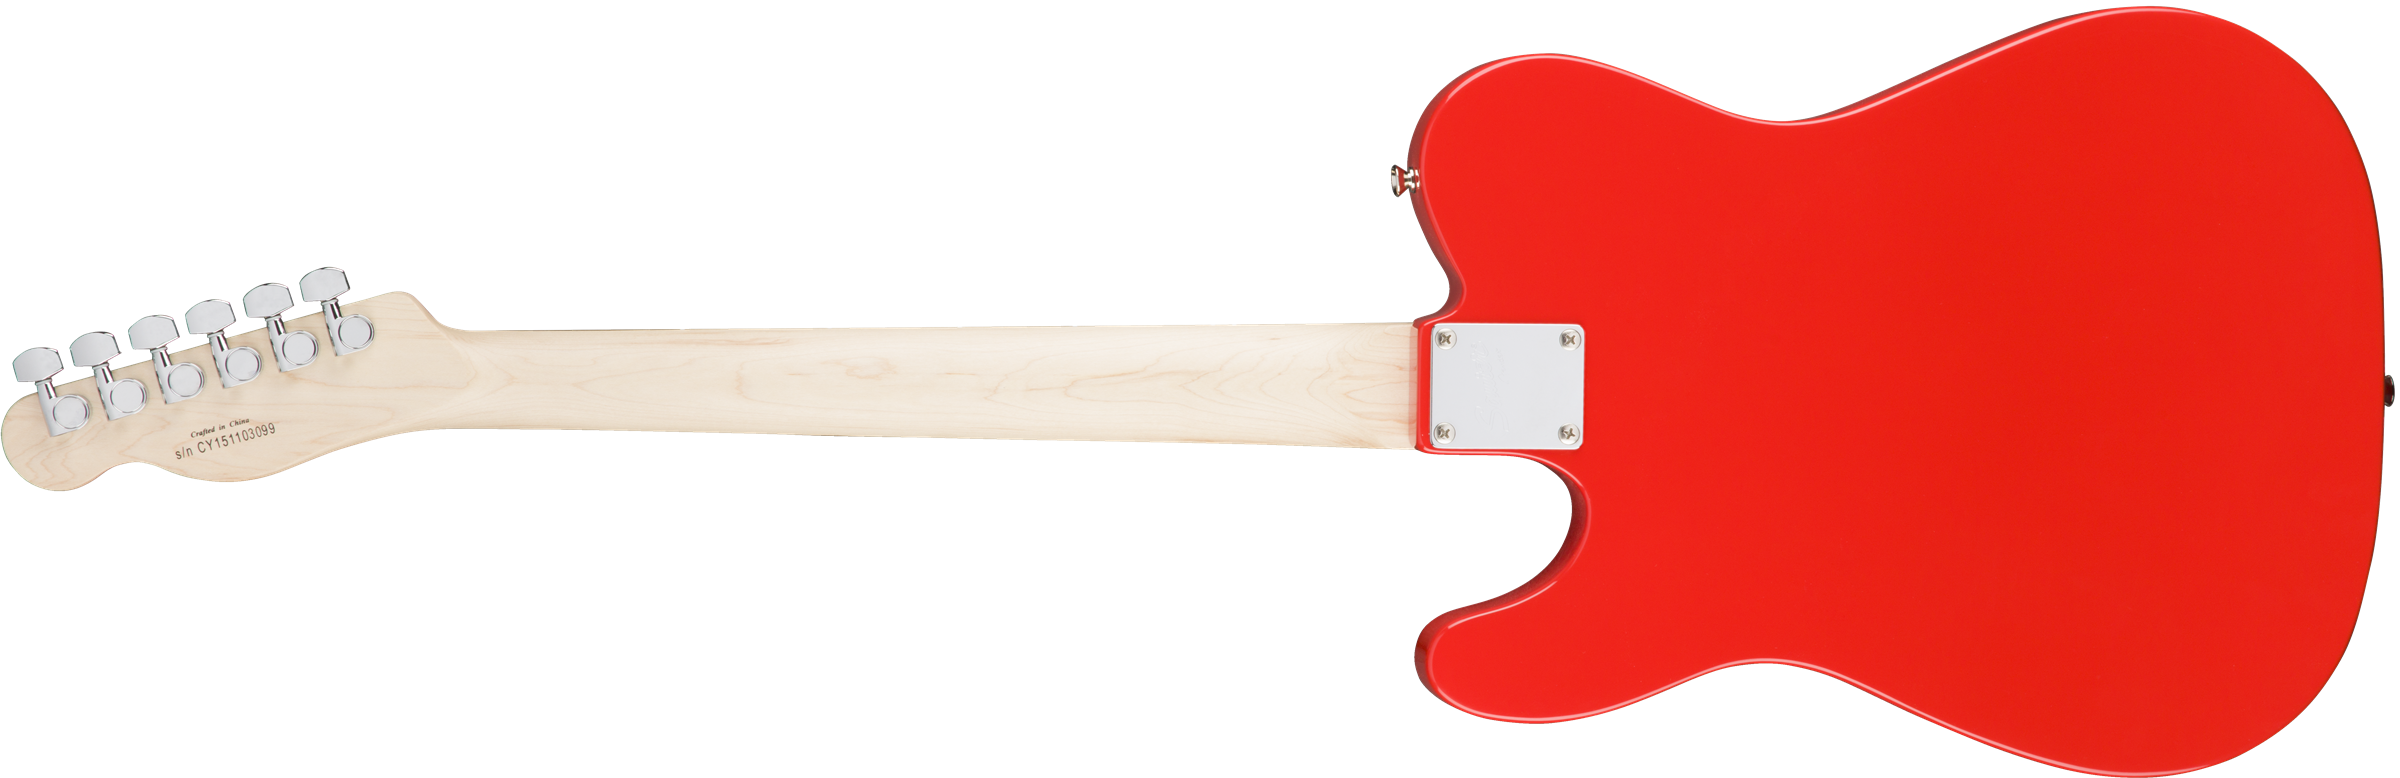 Squier Tele Affinity Series 2019 Lau - Race Red - Guitarra eléctrica con forma de tel - Variation 5